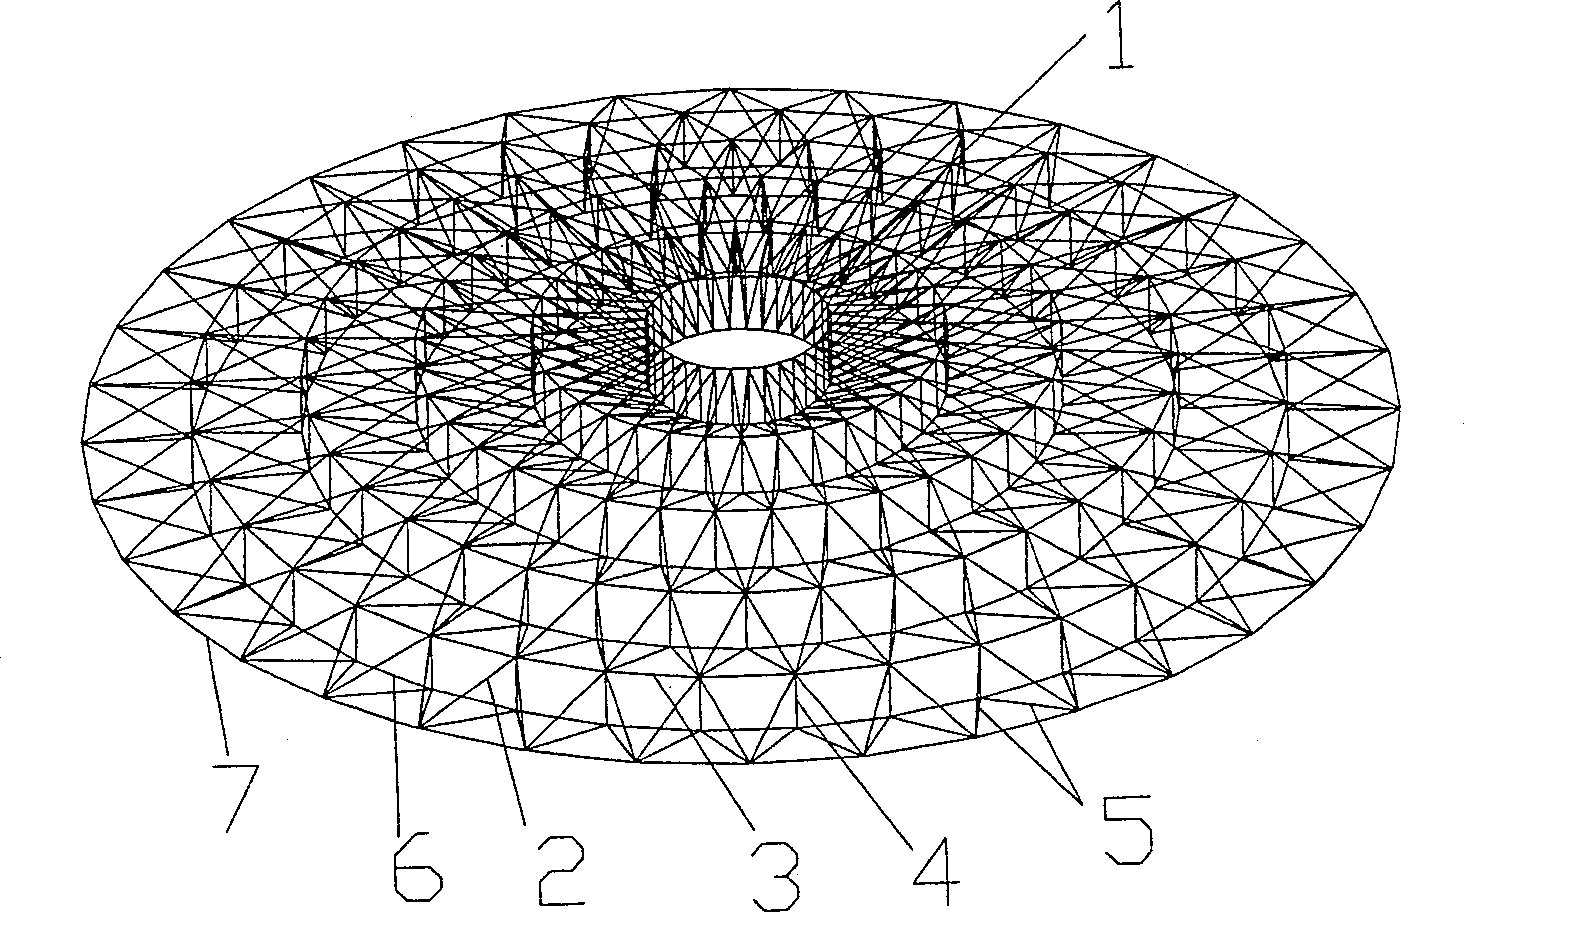 Cord string branch dome